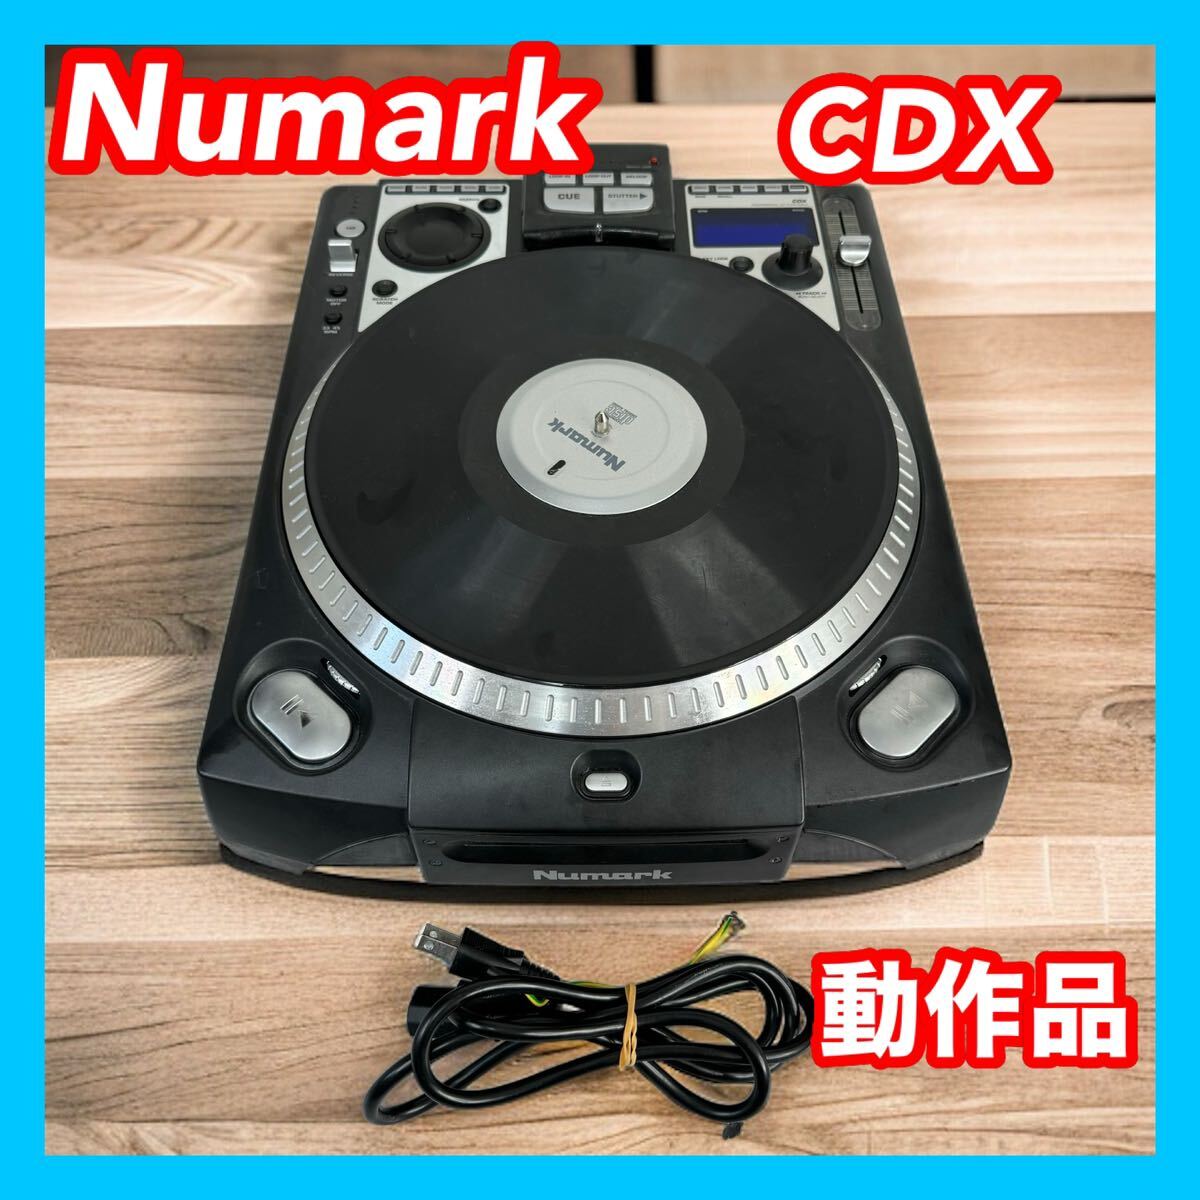 Numark CDX CDJ DJ оборудование 